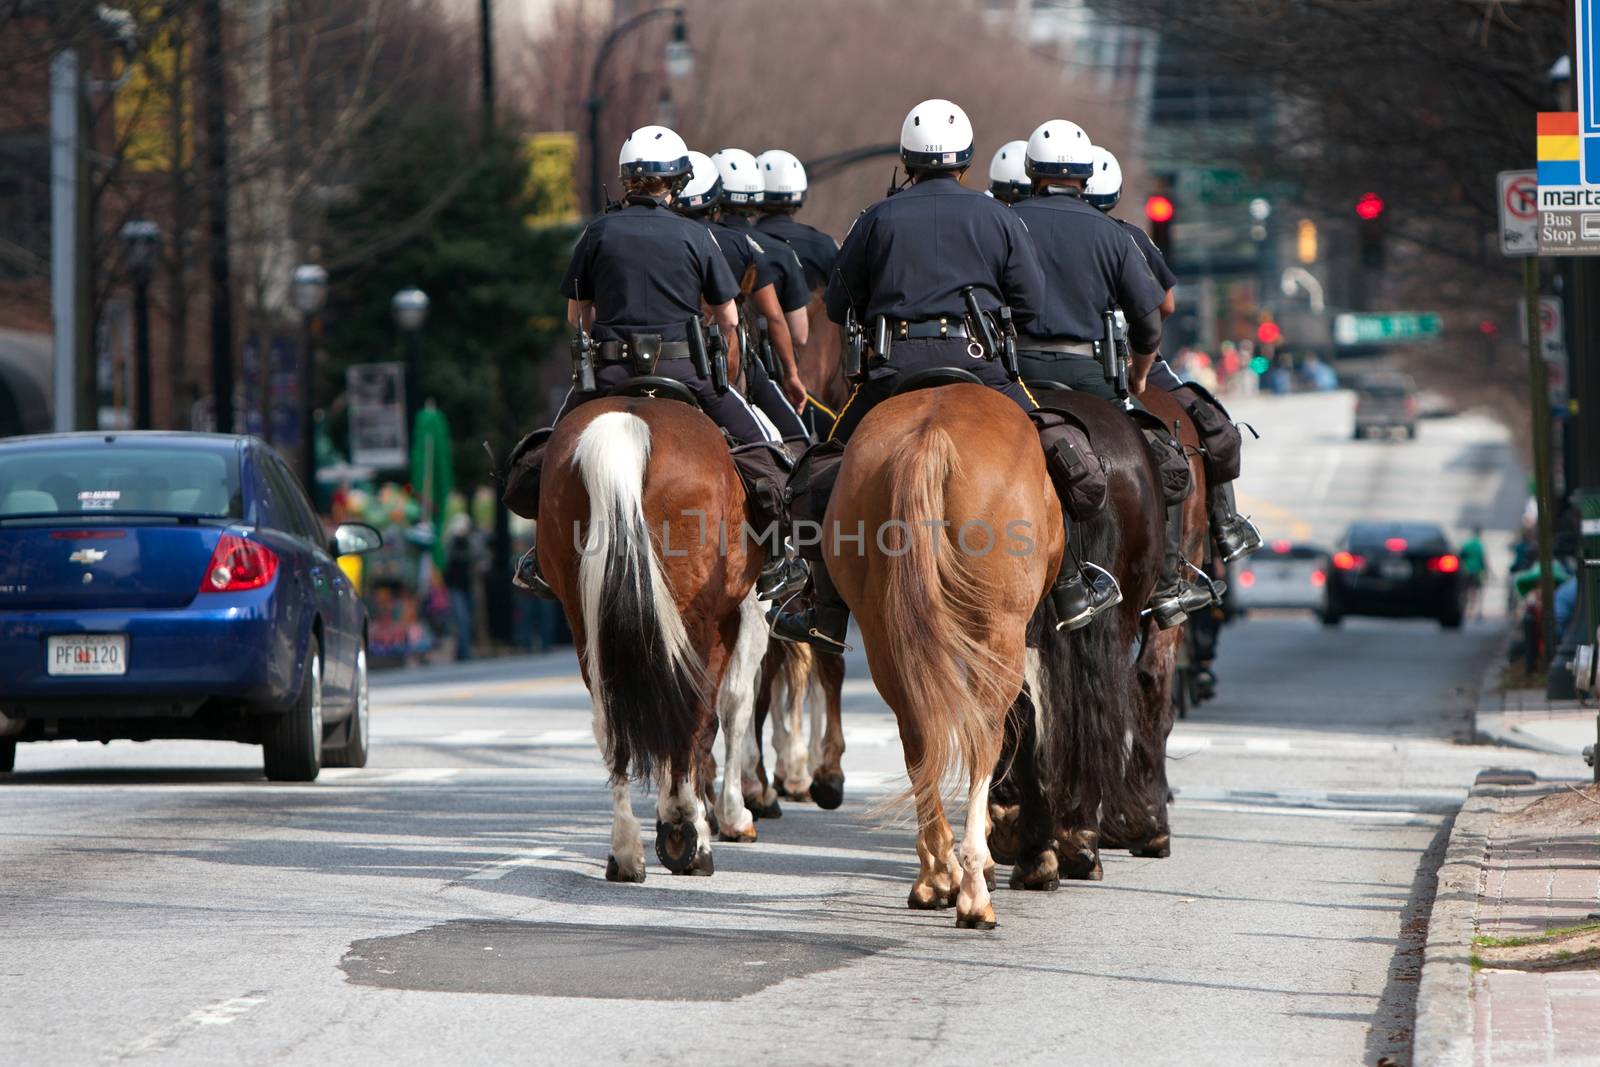 Atlanta Police Ride Horses Down Street Before St. Patrick's Parade by BluIz60